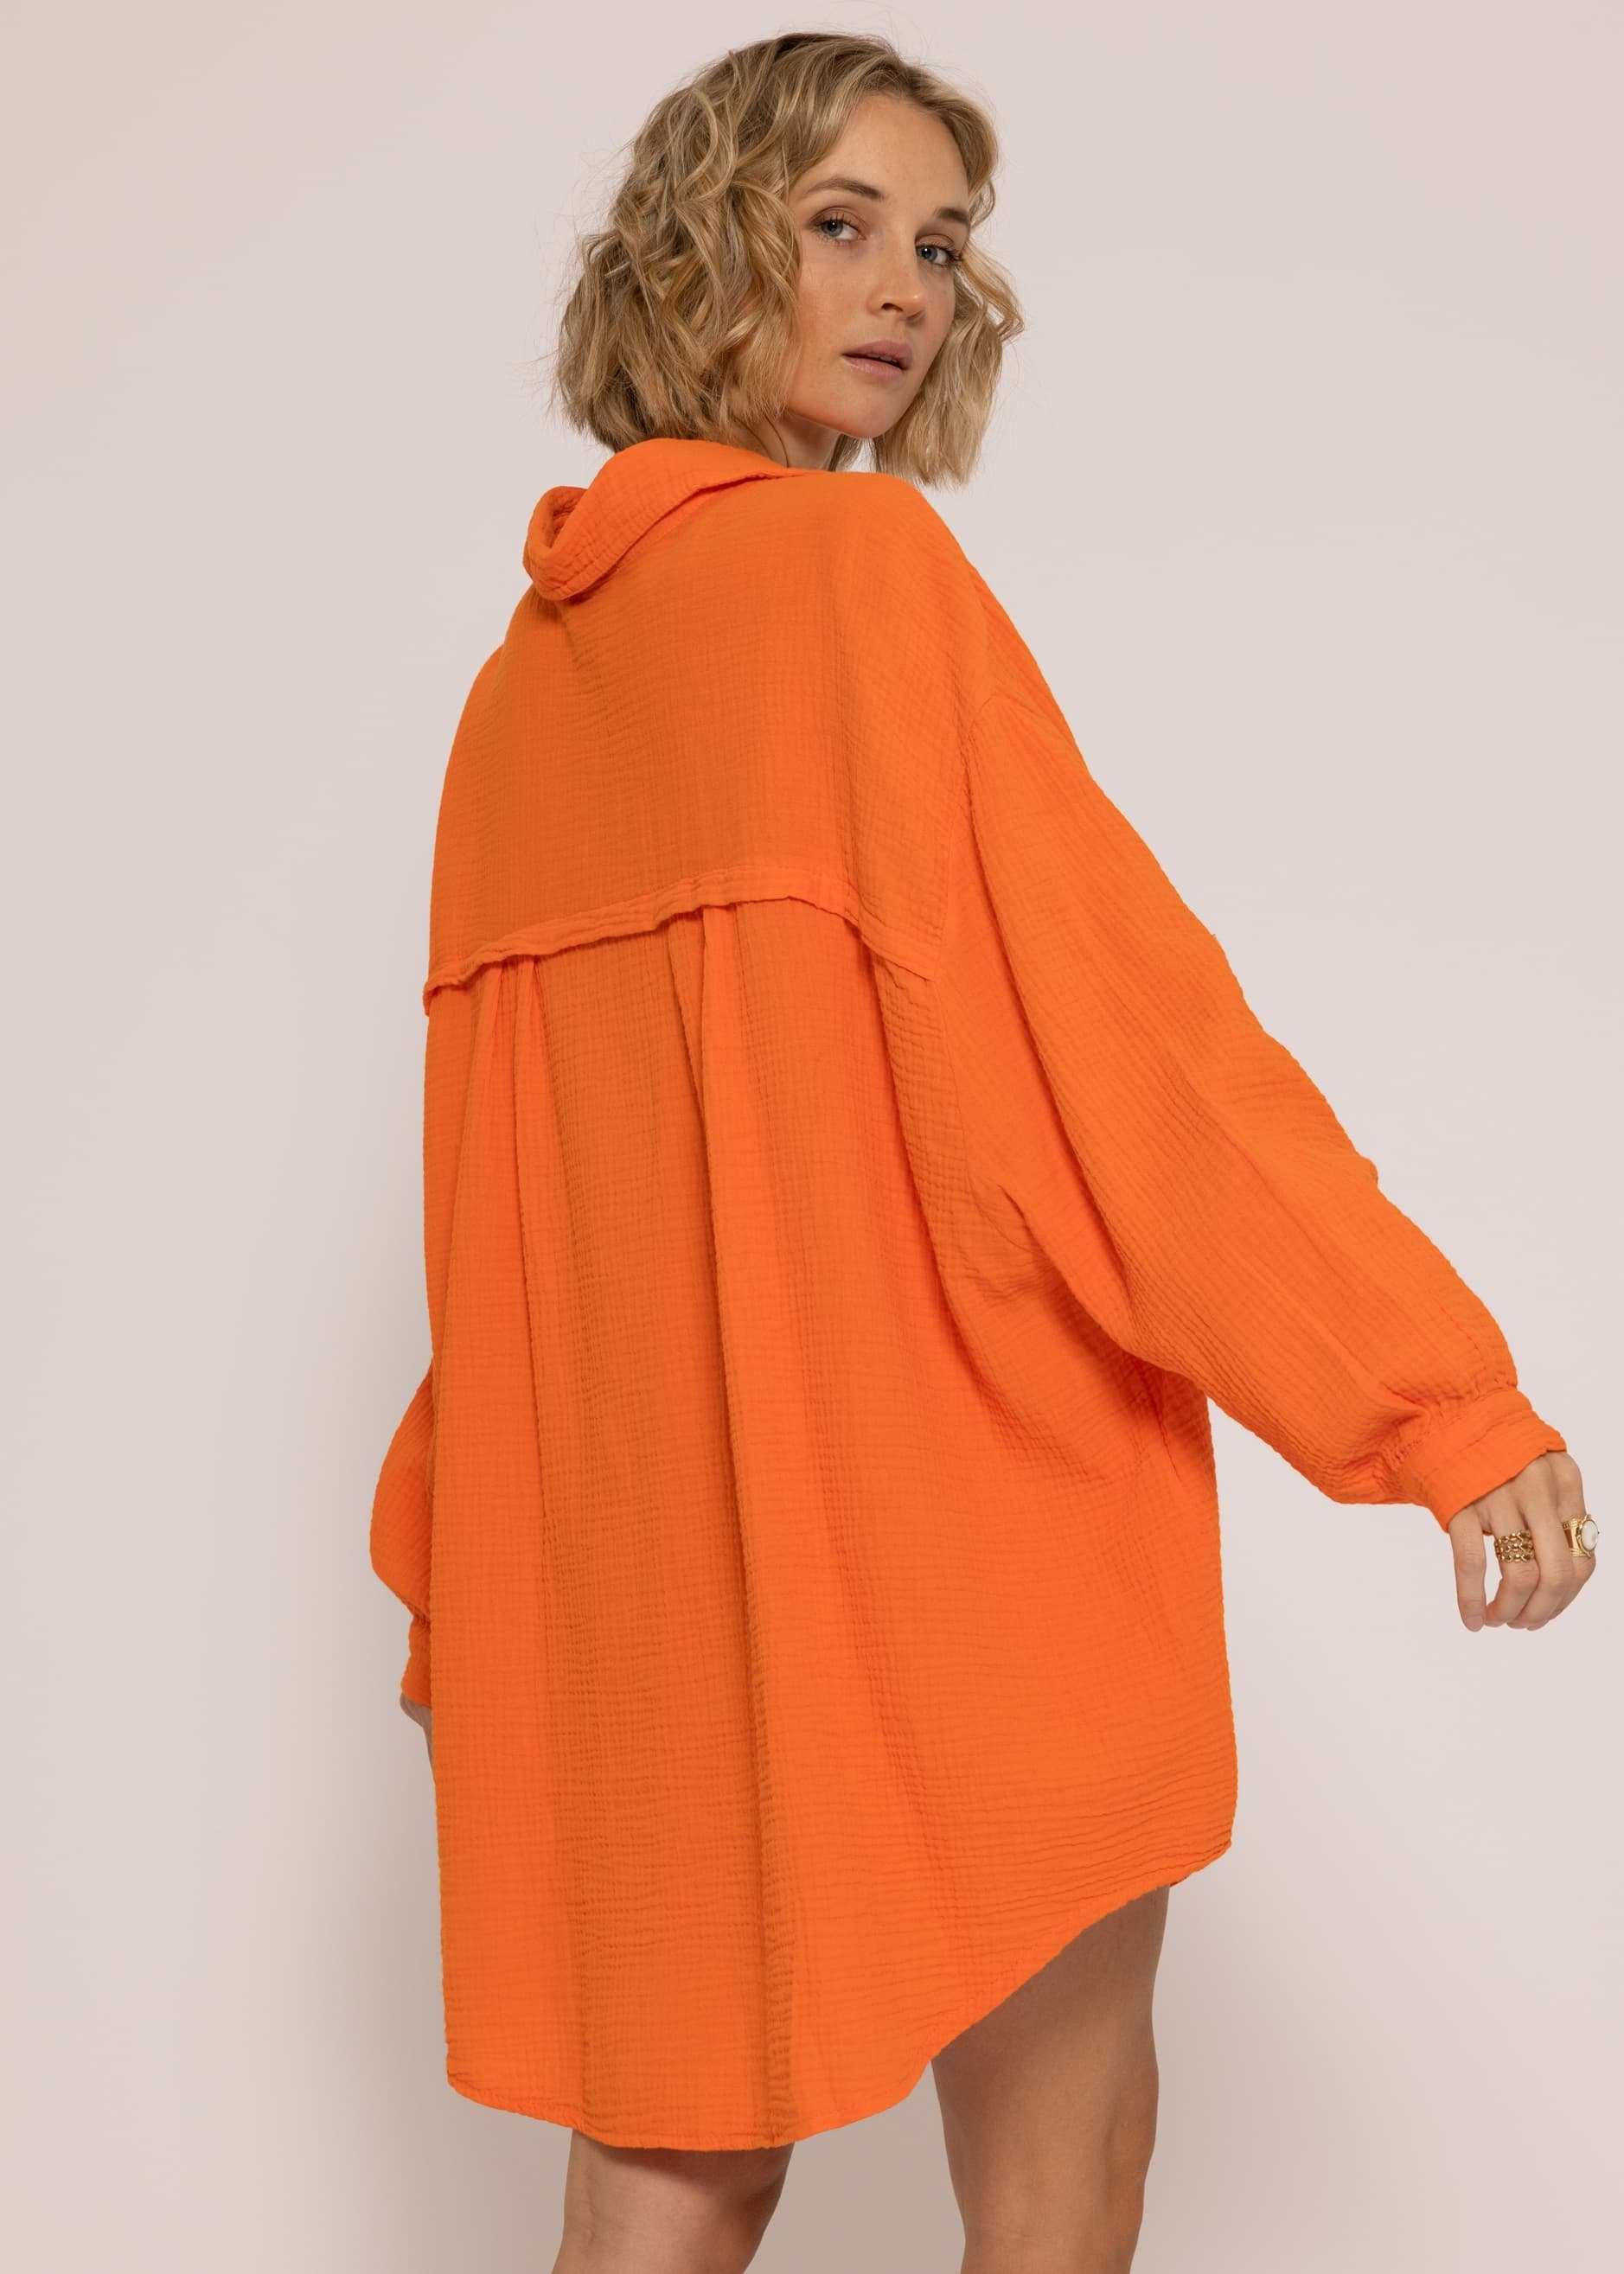 (Gr. Musselin Damen SASSYCLASSY Orange Langarm lang mit 36-48) One Bluse Oversize Hemdbluse V-Ausschnitt, Longbluse Baumwolle aus Size